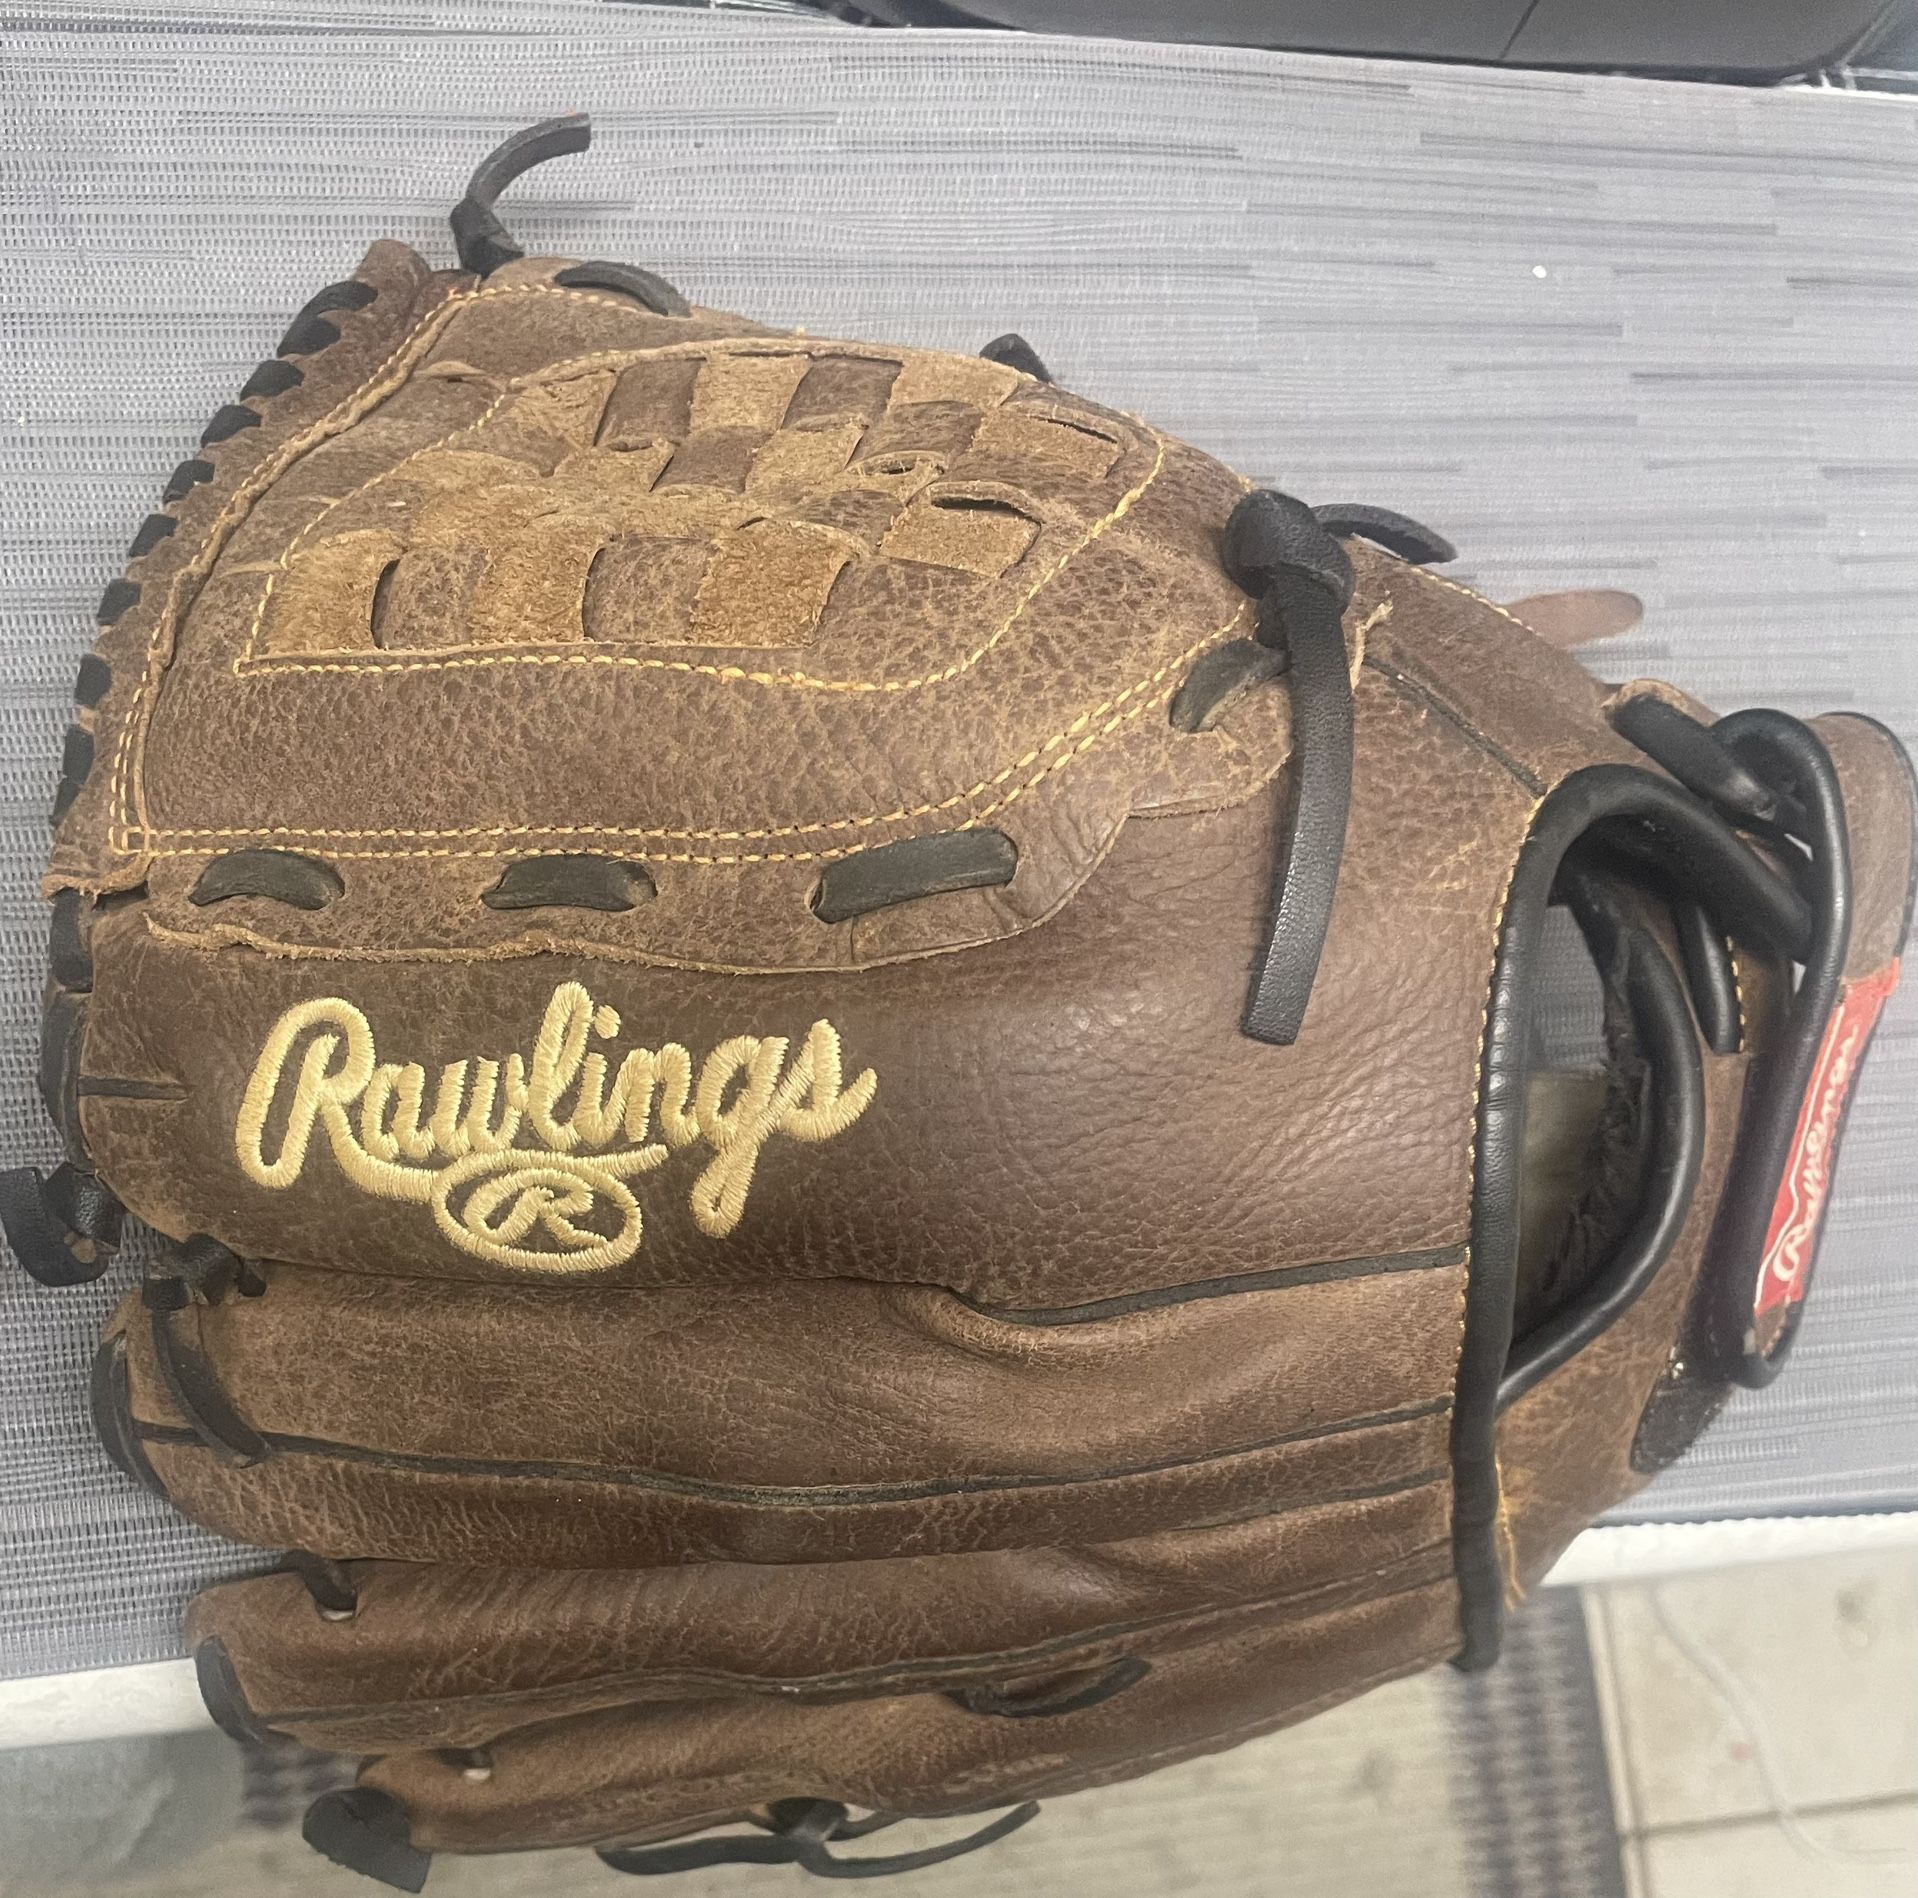 Rawlings Baseball / Softball Glove